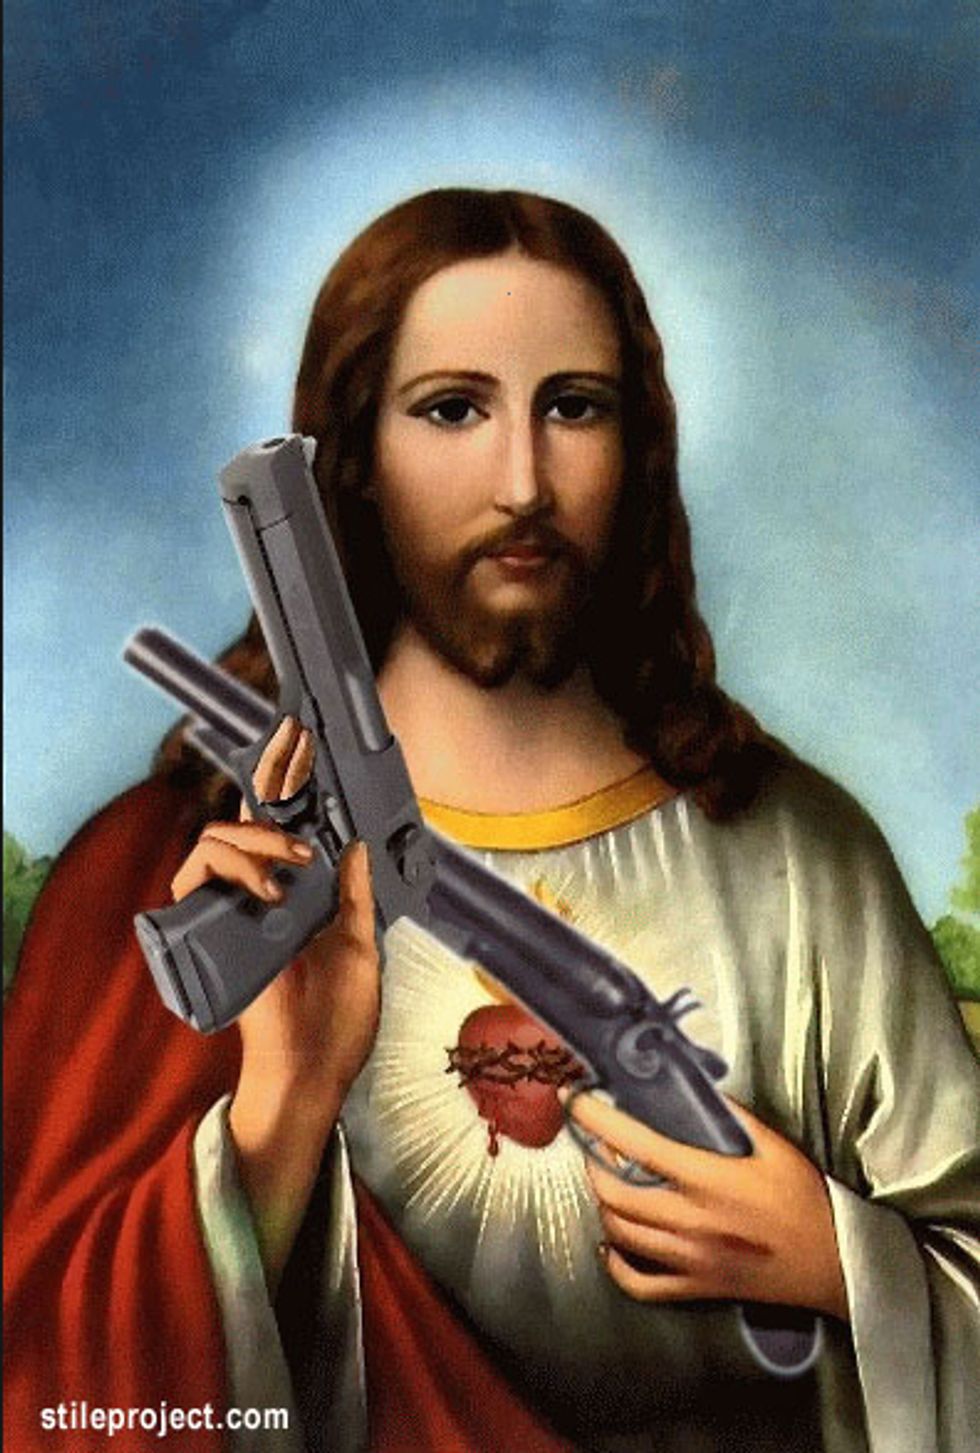 Kentucky Churches Giving Away Guns, Letting Jesus Sort 'Em Out